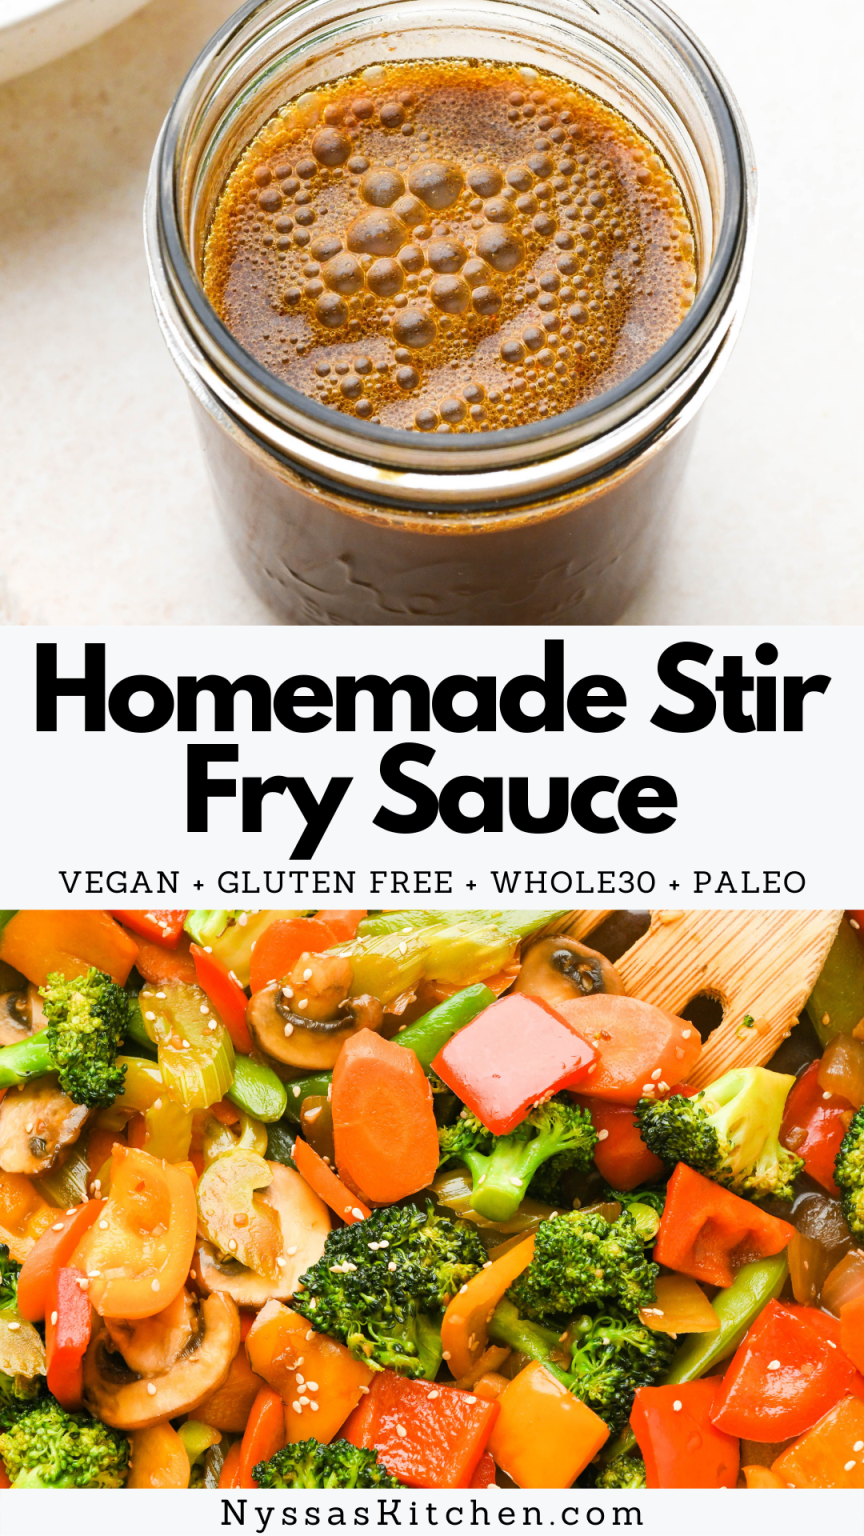 Homemade Stir Fry Sauce - Gluten Free + Whole30 + Vegan